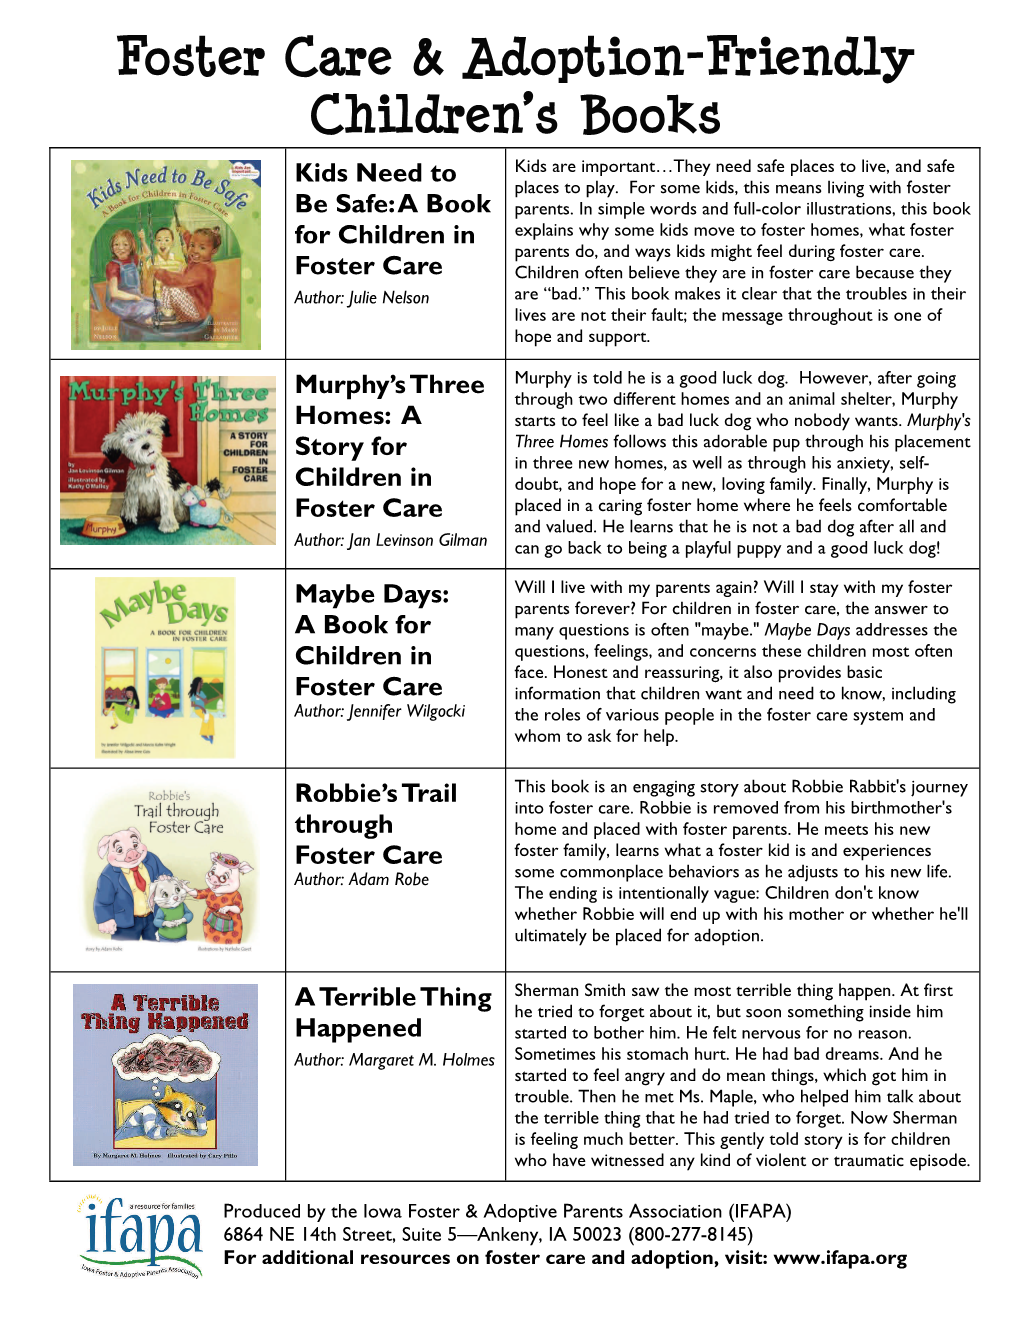 Foster Care & Adoption-Friendly Children's Books